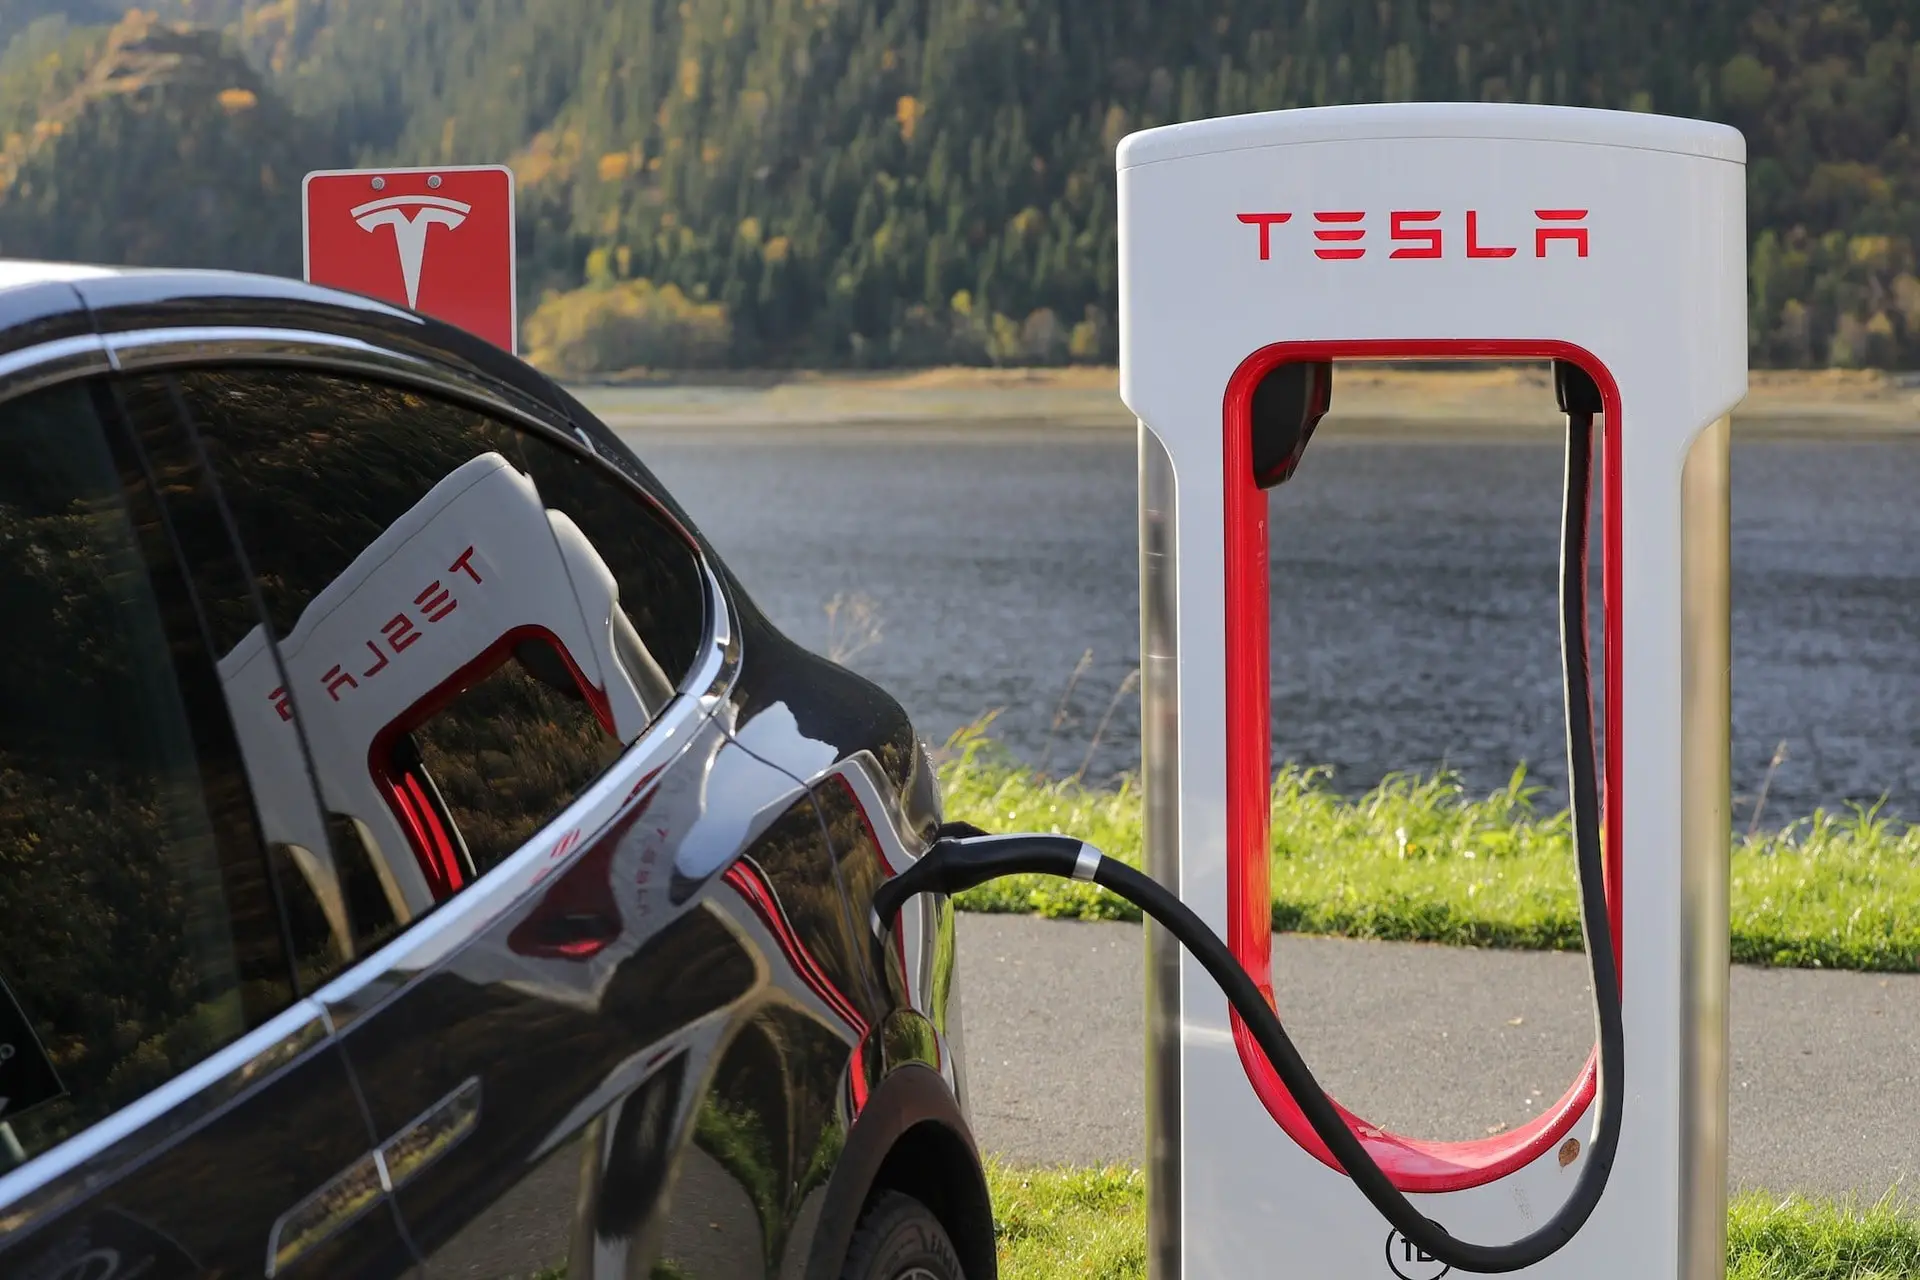 Is Supercharging bad for Tesla